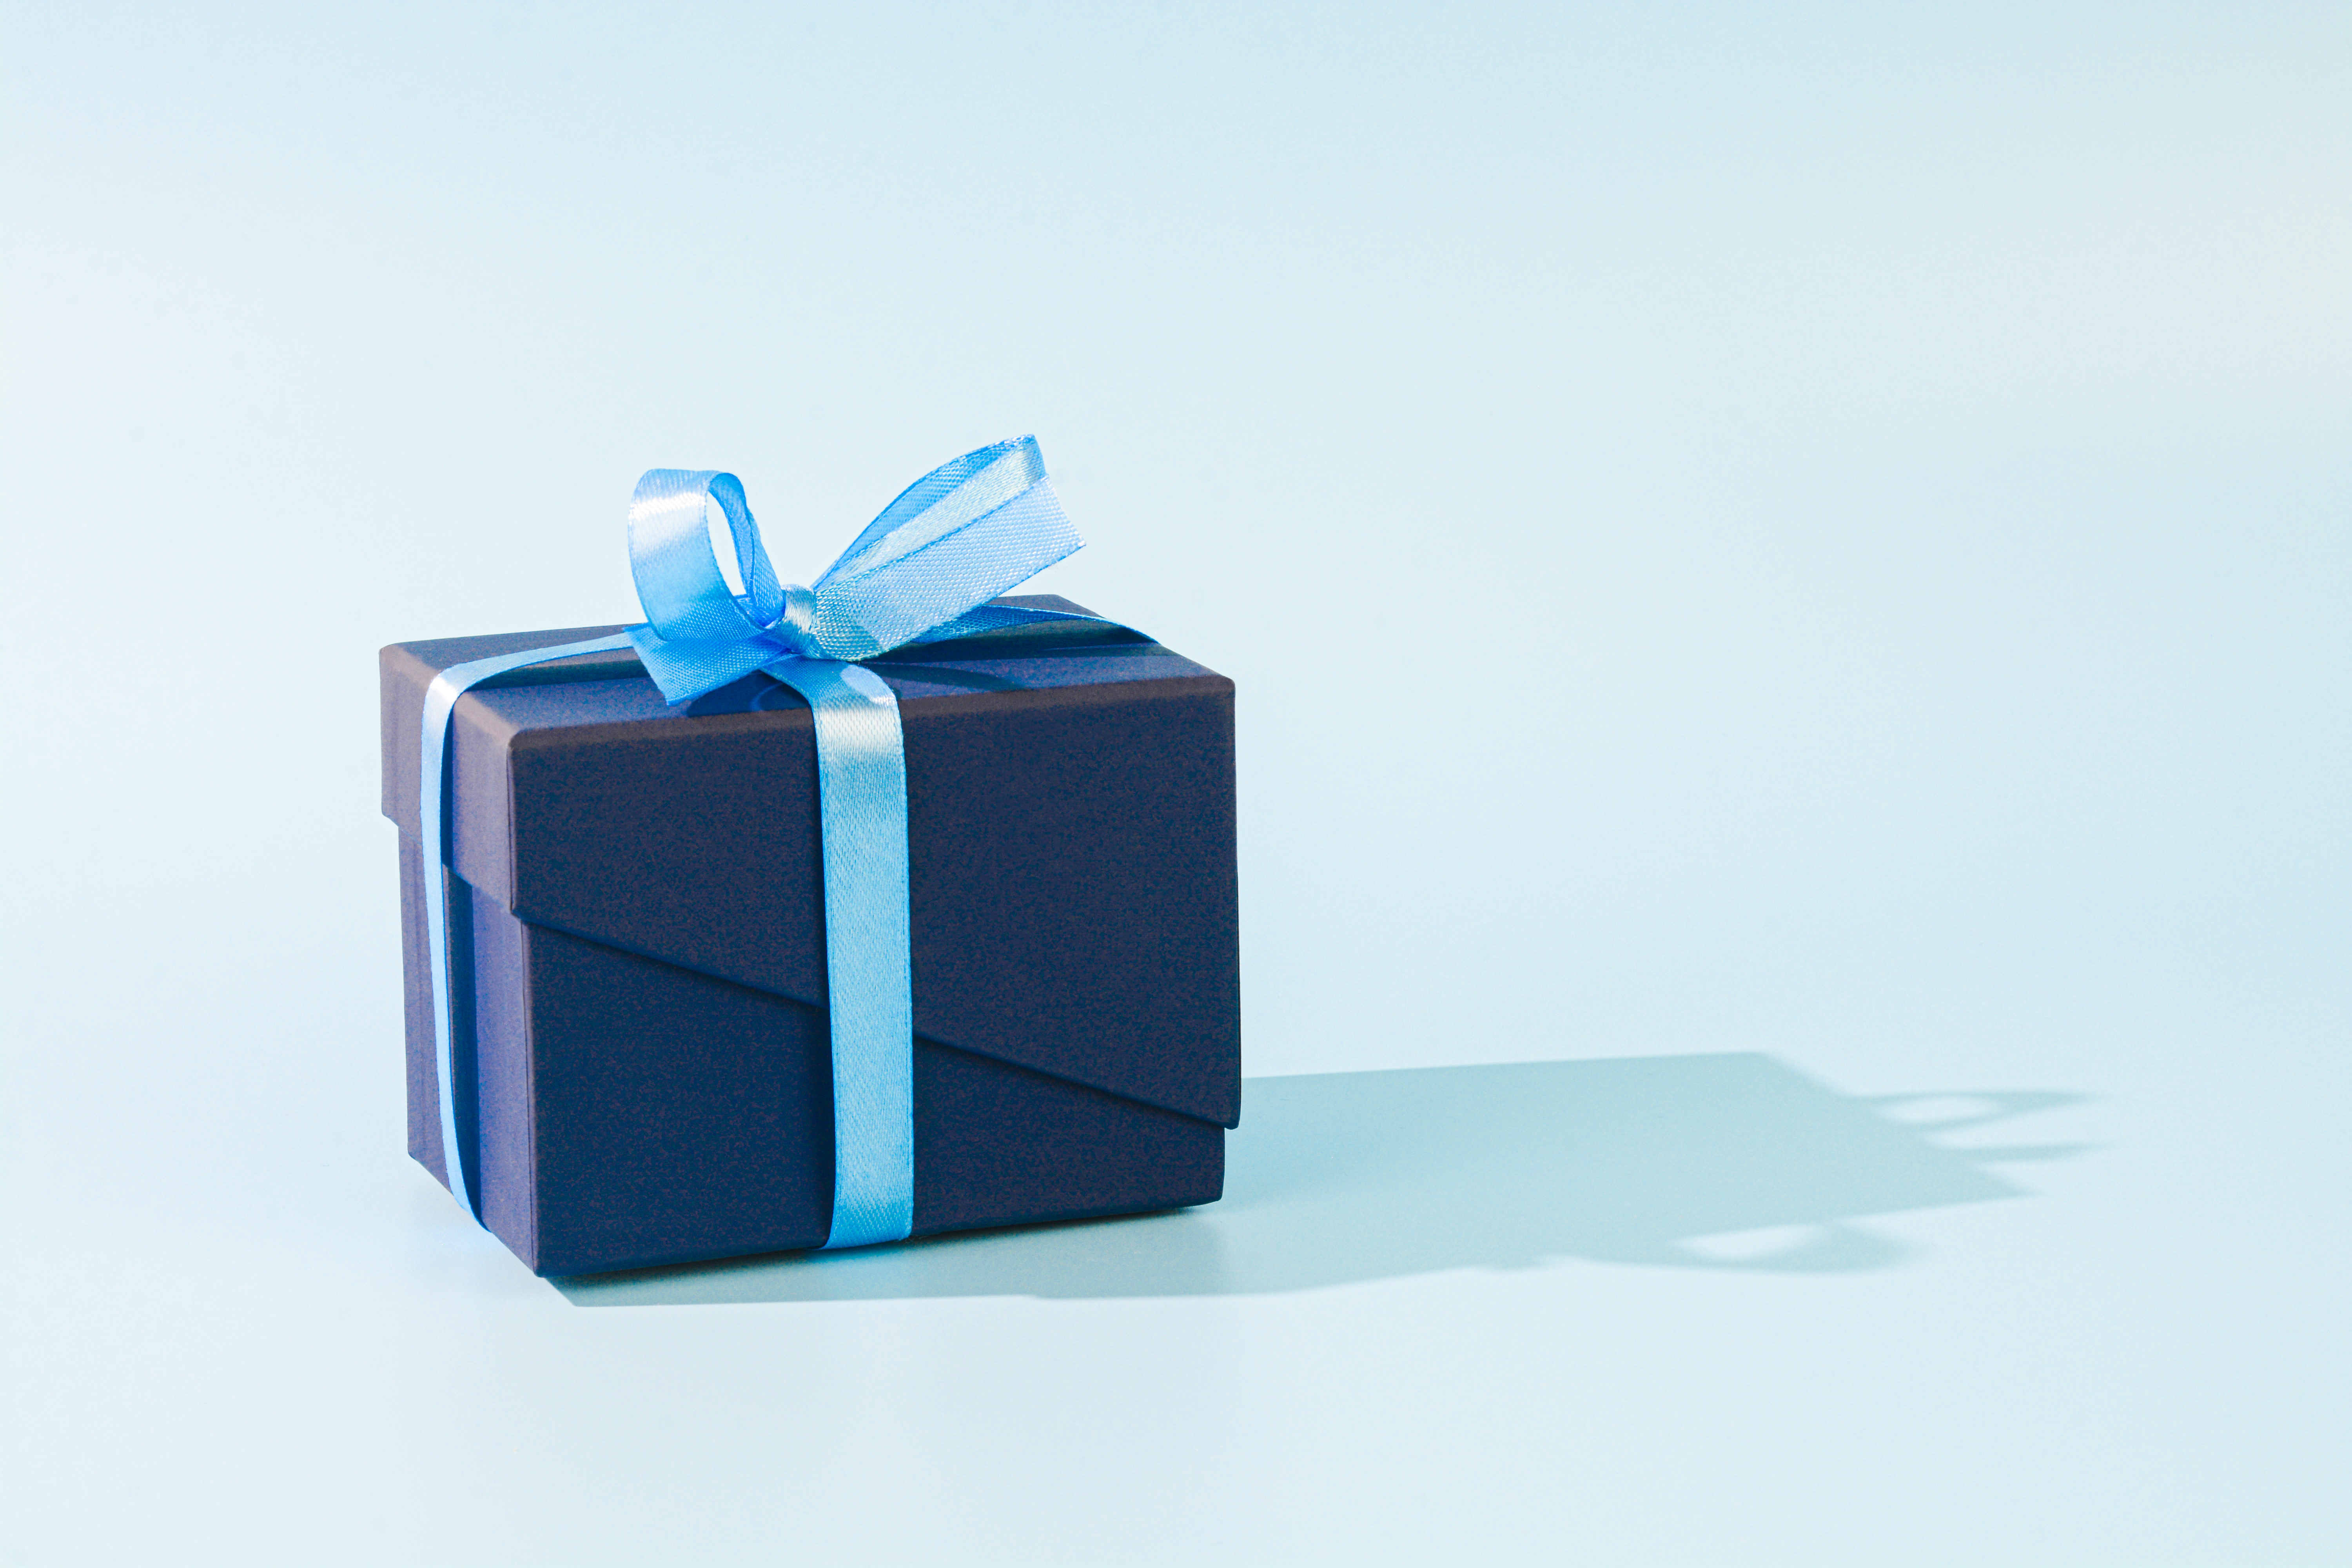 Un regalo azul oscuro envuelto con un lazo azul claro | Foto: Getty Images